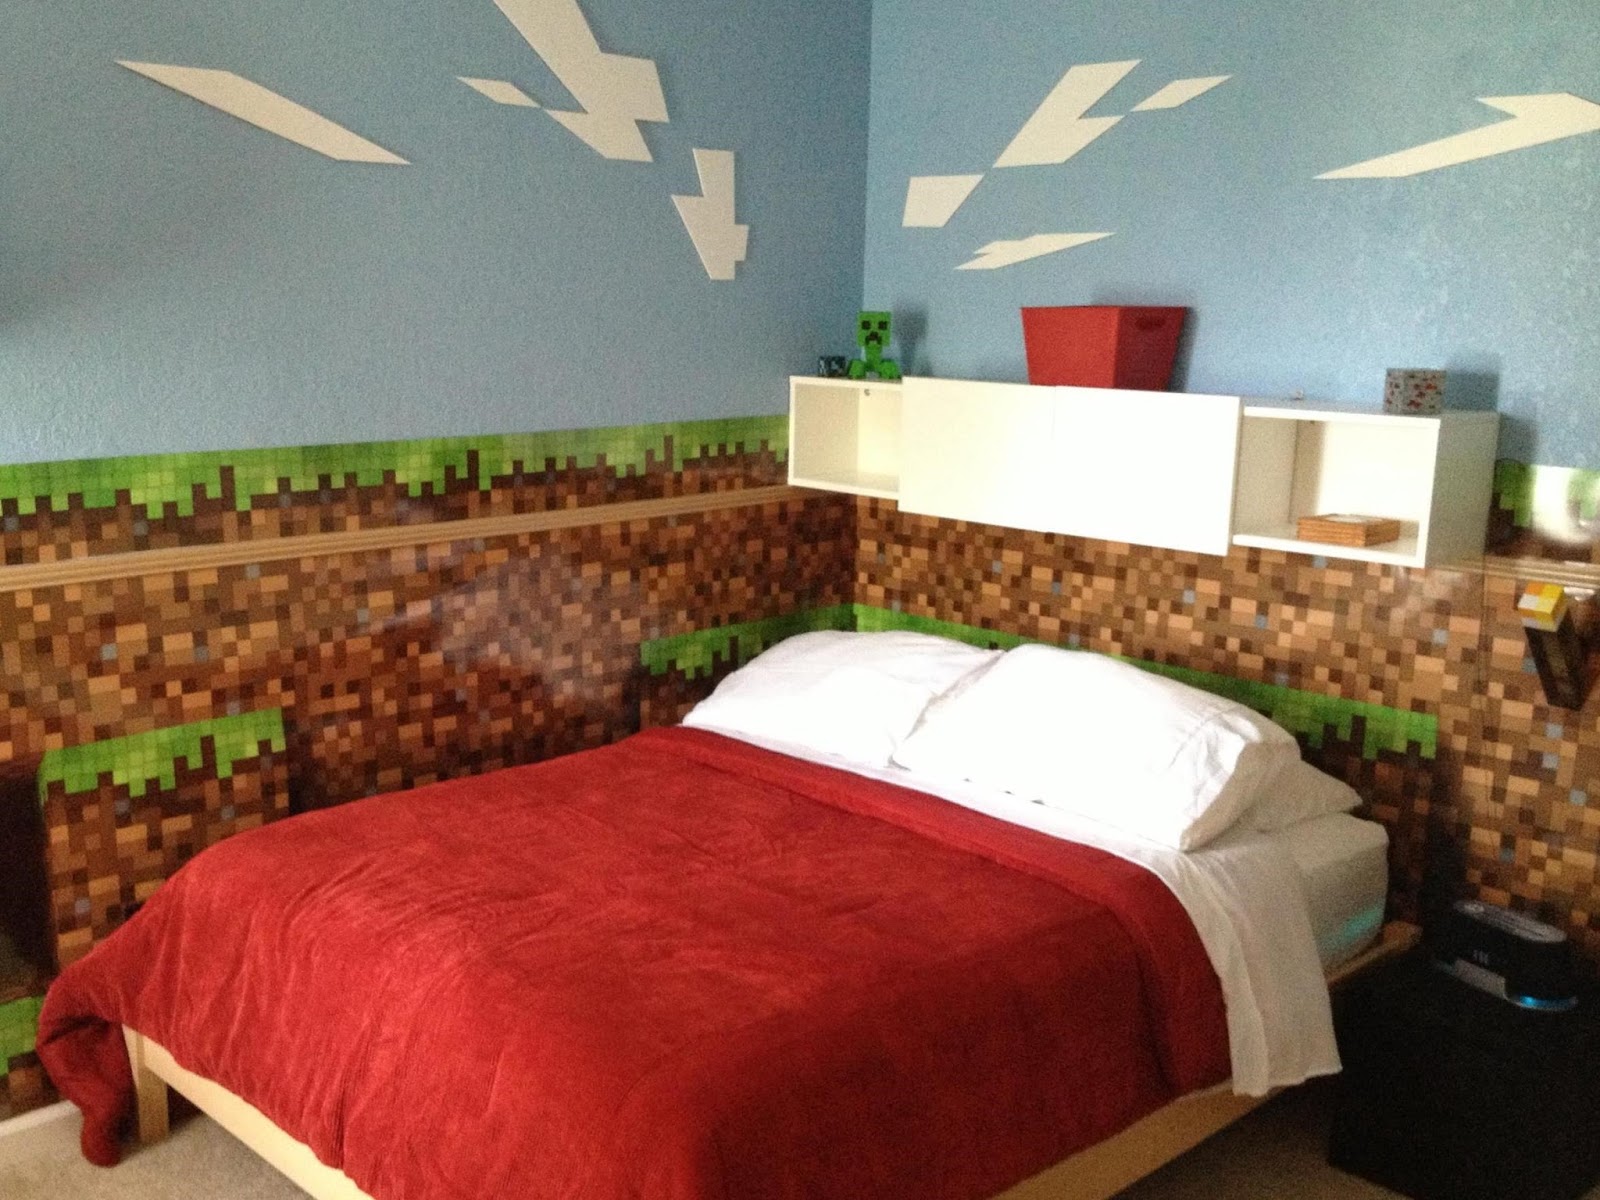 14 Minecraft Bedroom Design Ideas-7  Best Ideas Minecraft Bedroom Decor  Minecraft,Bedroom,Design,Ideas